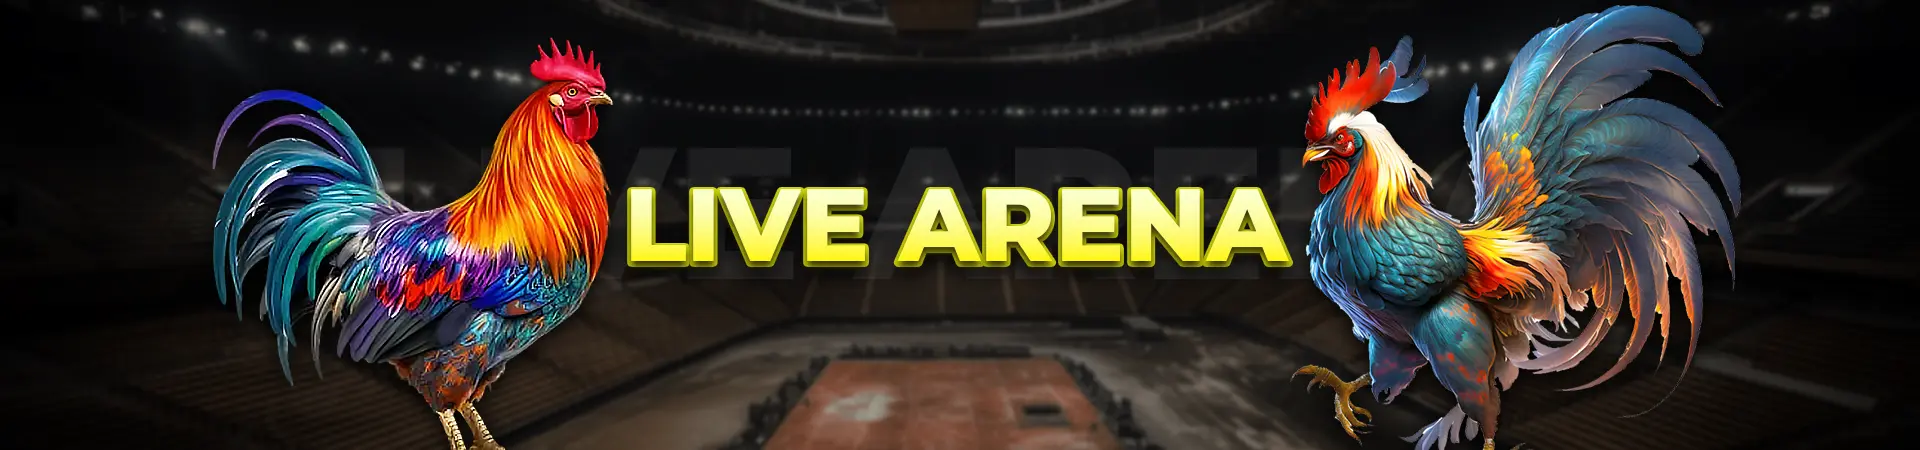 Live Arena_Ori